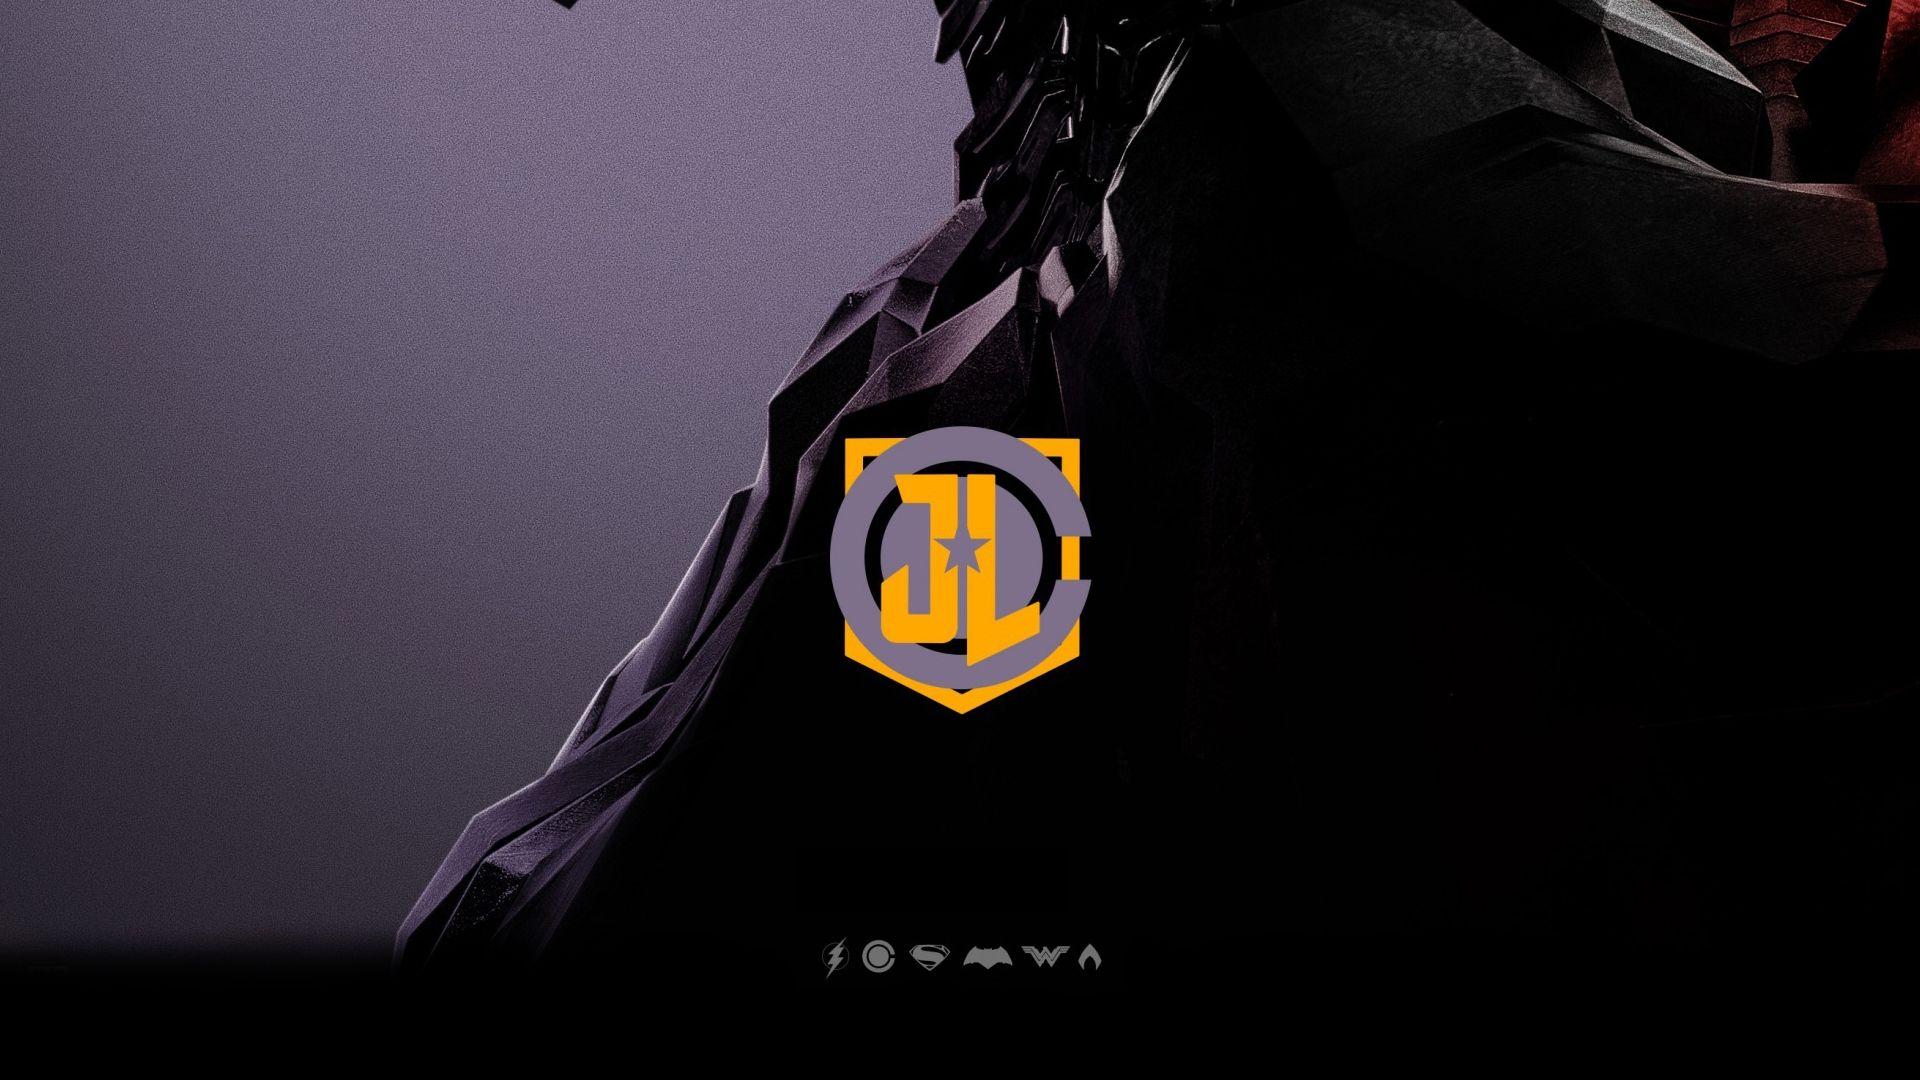 HD Justice League Cyborg Logo 2017 Movie